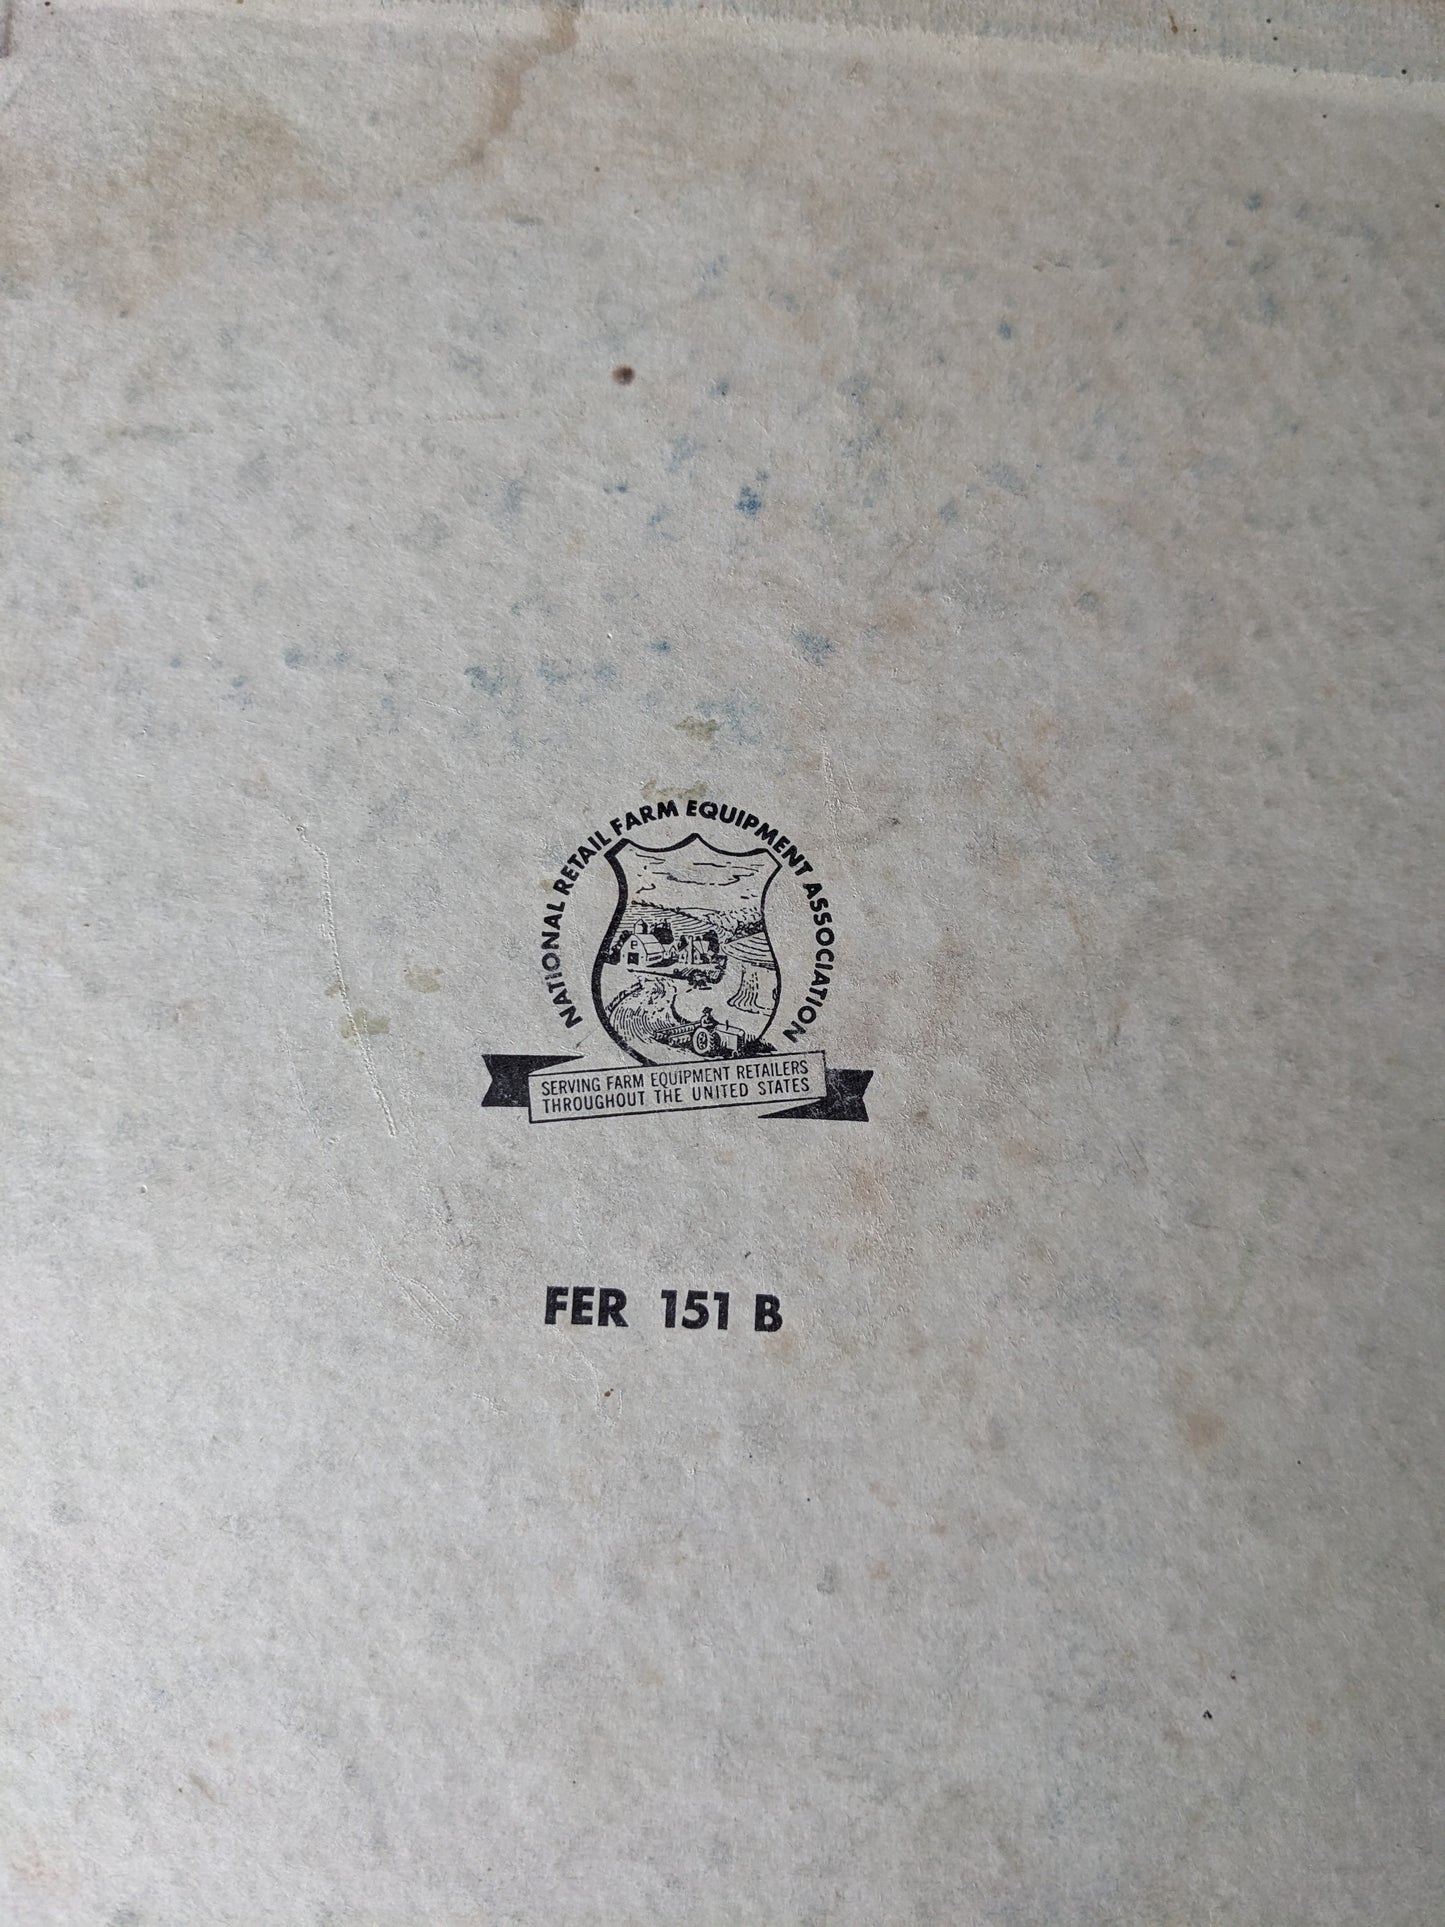 John Deere Tractor Repair Receipt Book from the 1960's